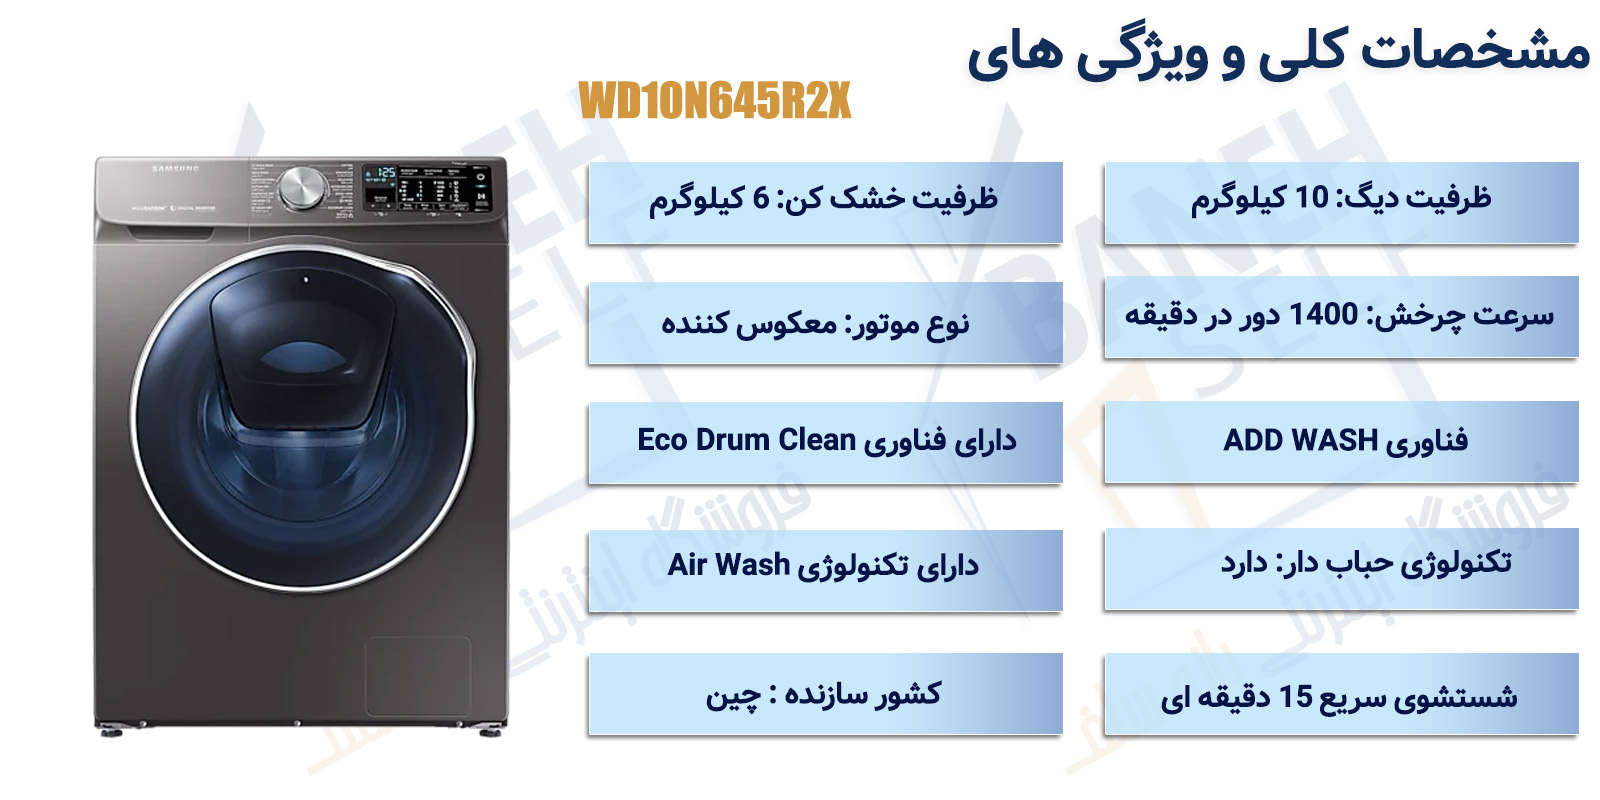 ماشین-لباسشویی-ادواش-سامسونگ-مدل-WD10N645R2X-ظرفیت-10.6-کیلوگرم_8